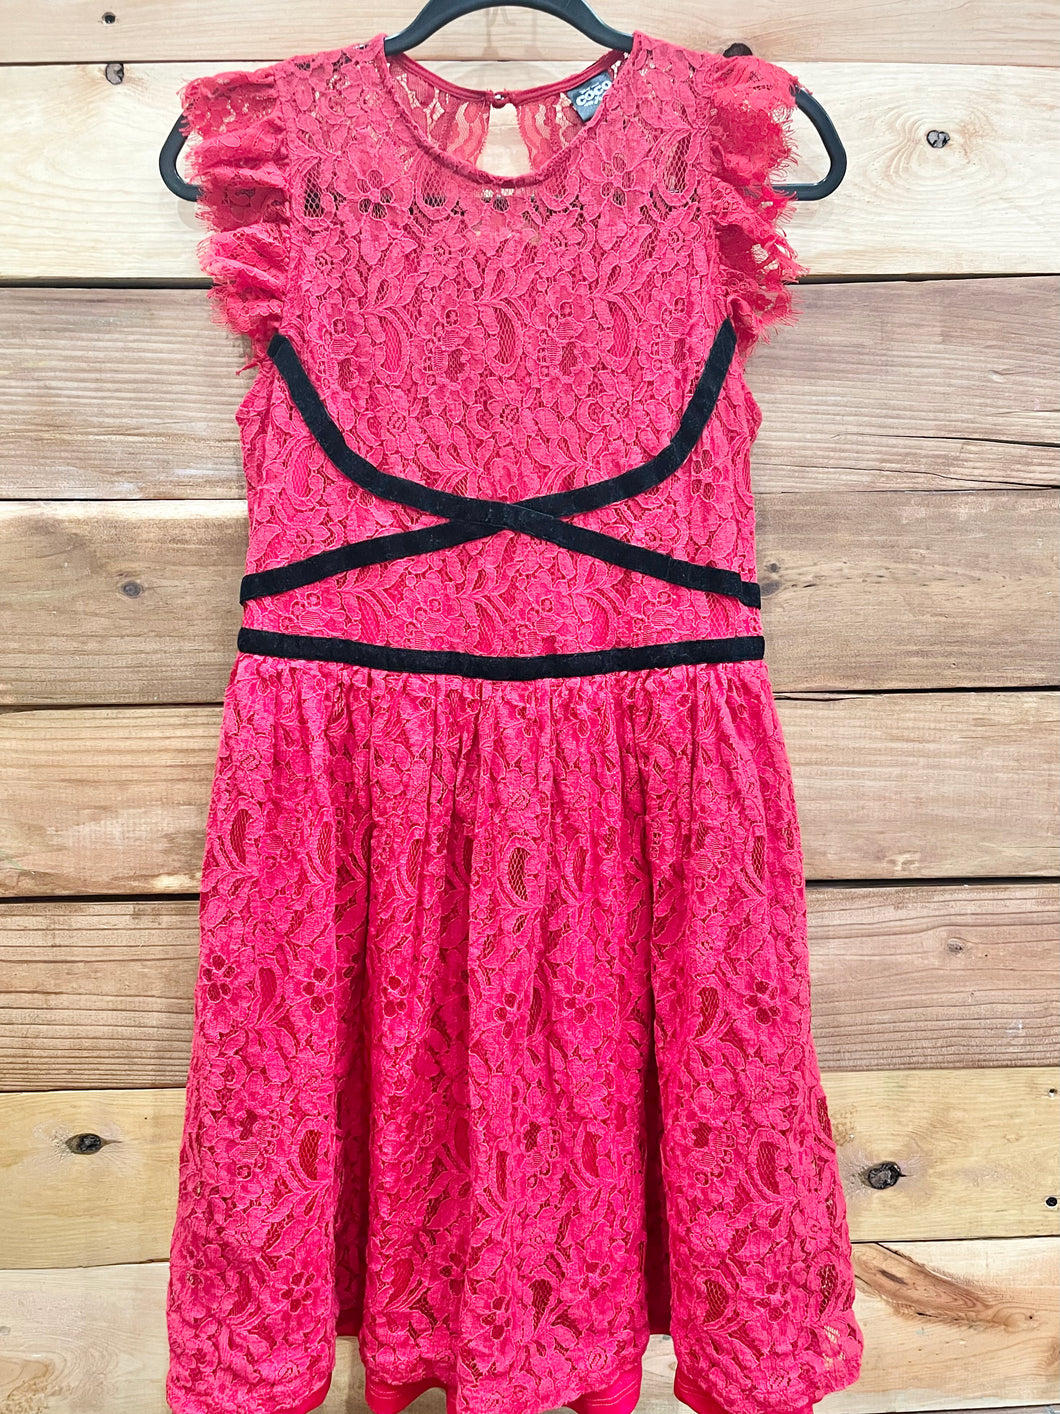 Disney Red Lace Dress Size 12-14